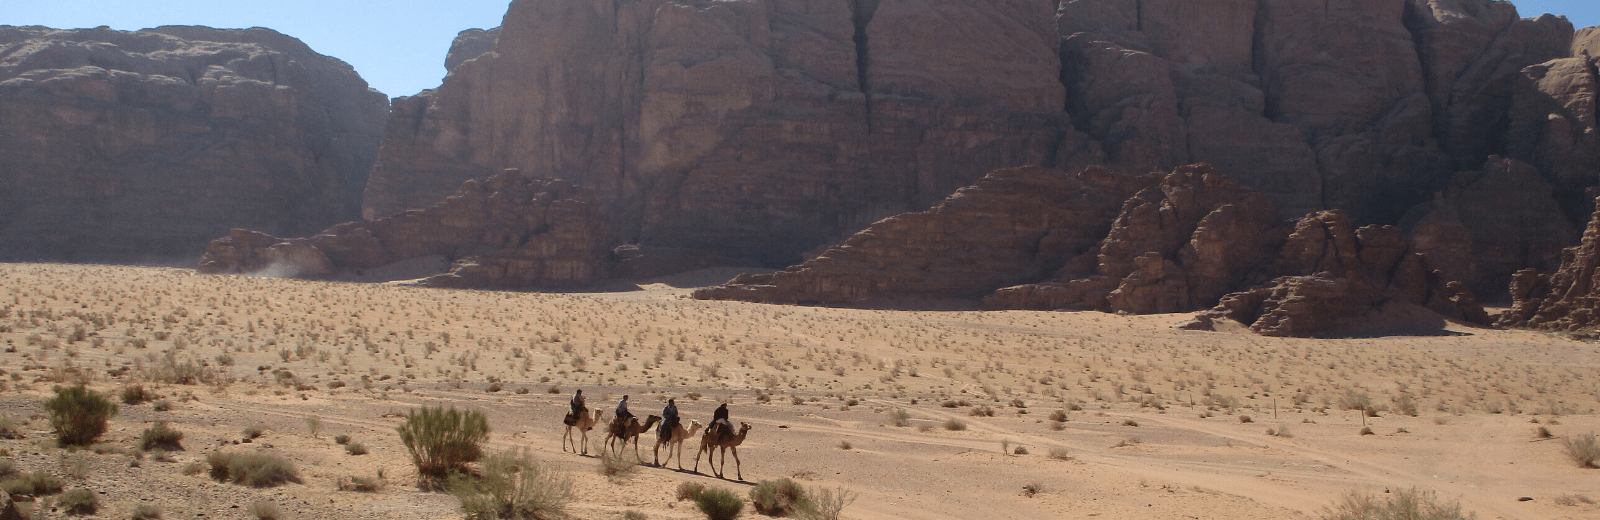 Kamelen tocht Wadi Rum, Jordan Desert Journeys